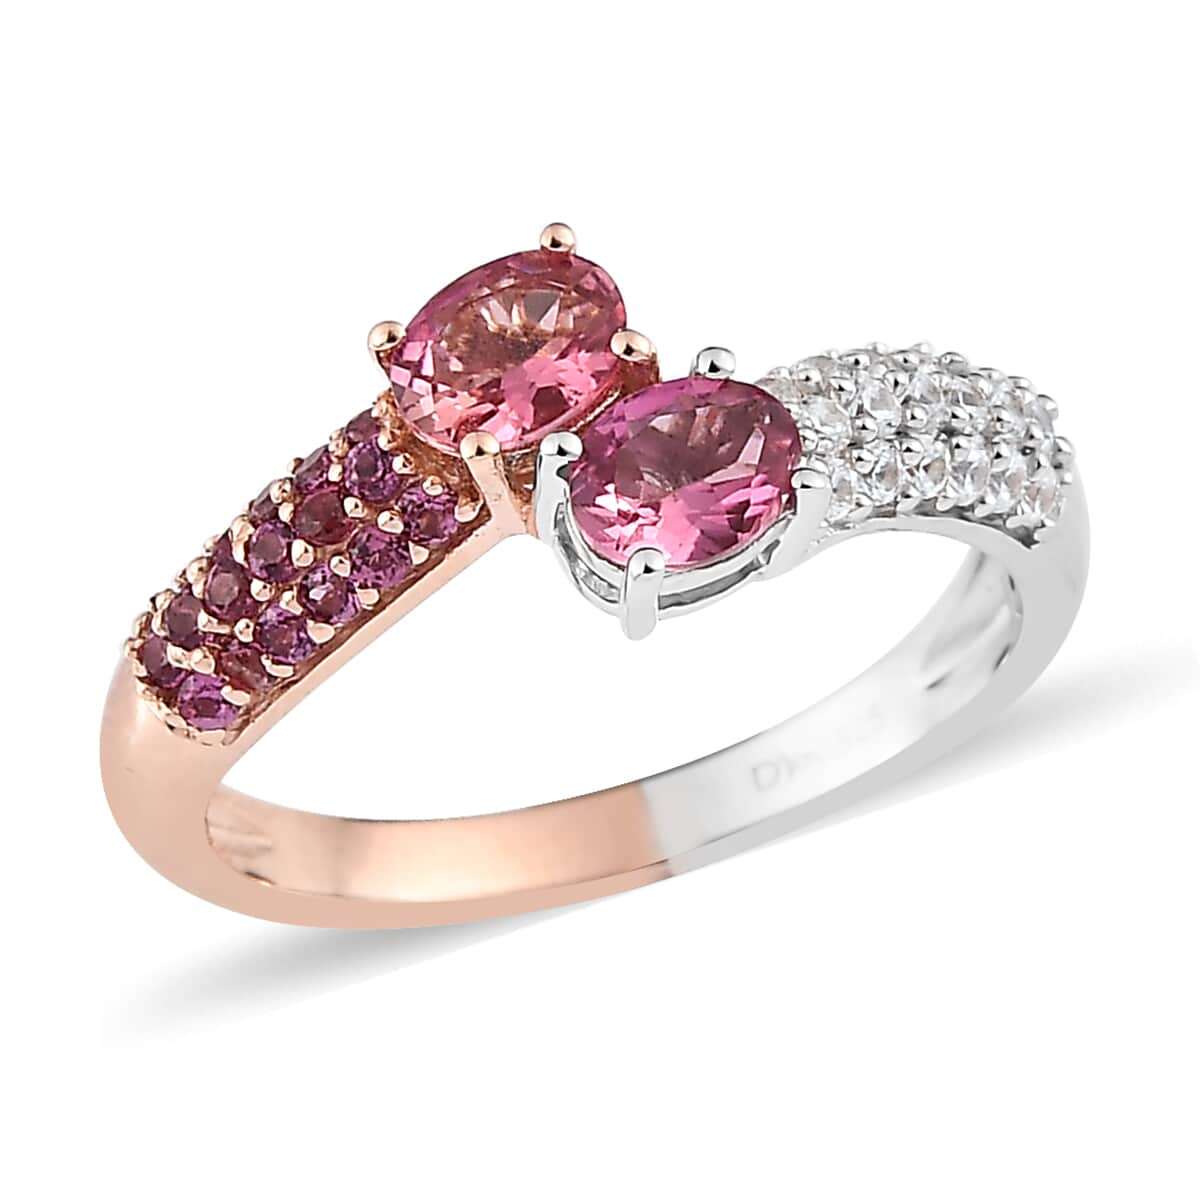 Rose gold DIVAS' DREAM Necklace Pink with 1.15 ct Diamonds,Pink Tourmaline